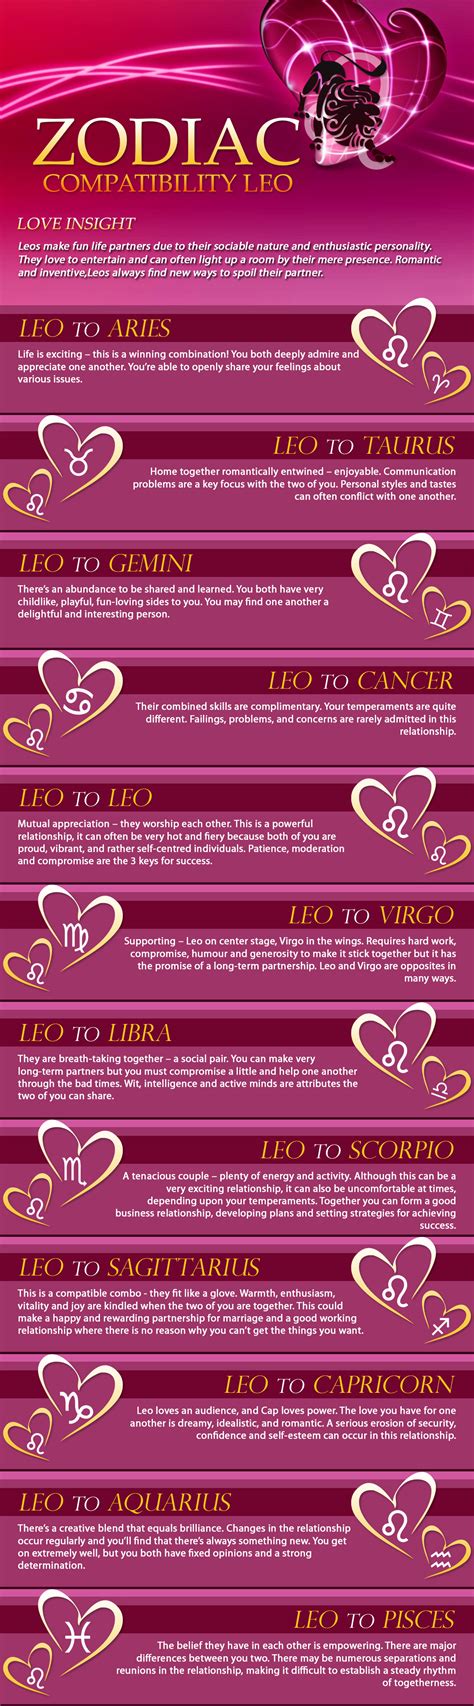 Leo Compatibility Leo Relationship Leo Compatibility Leo